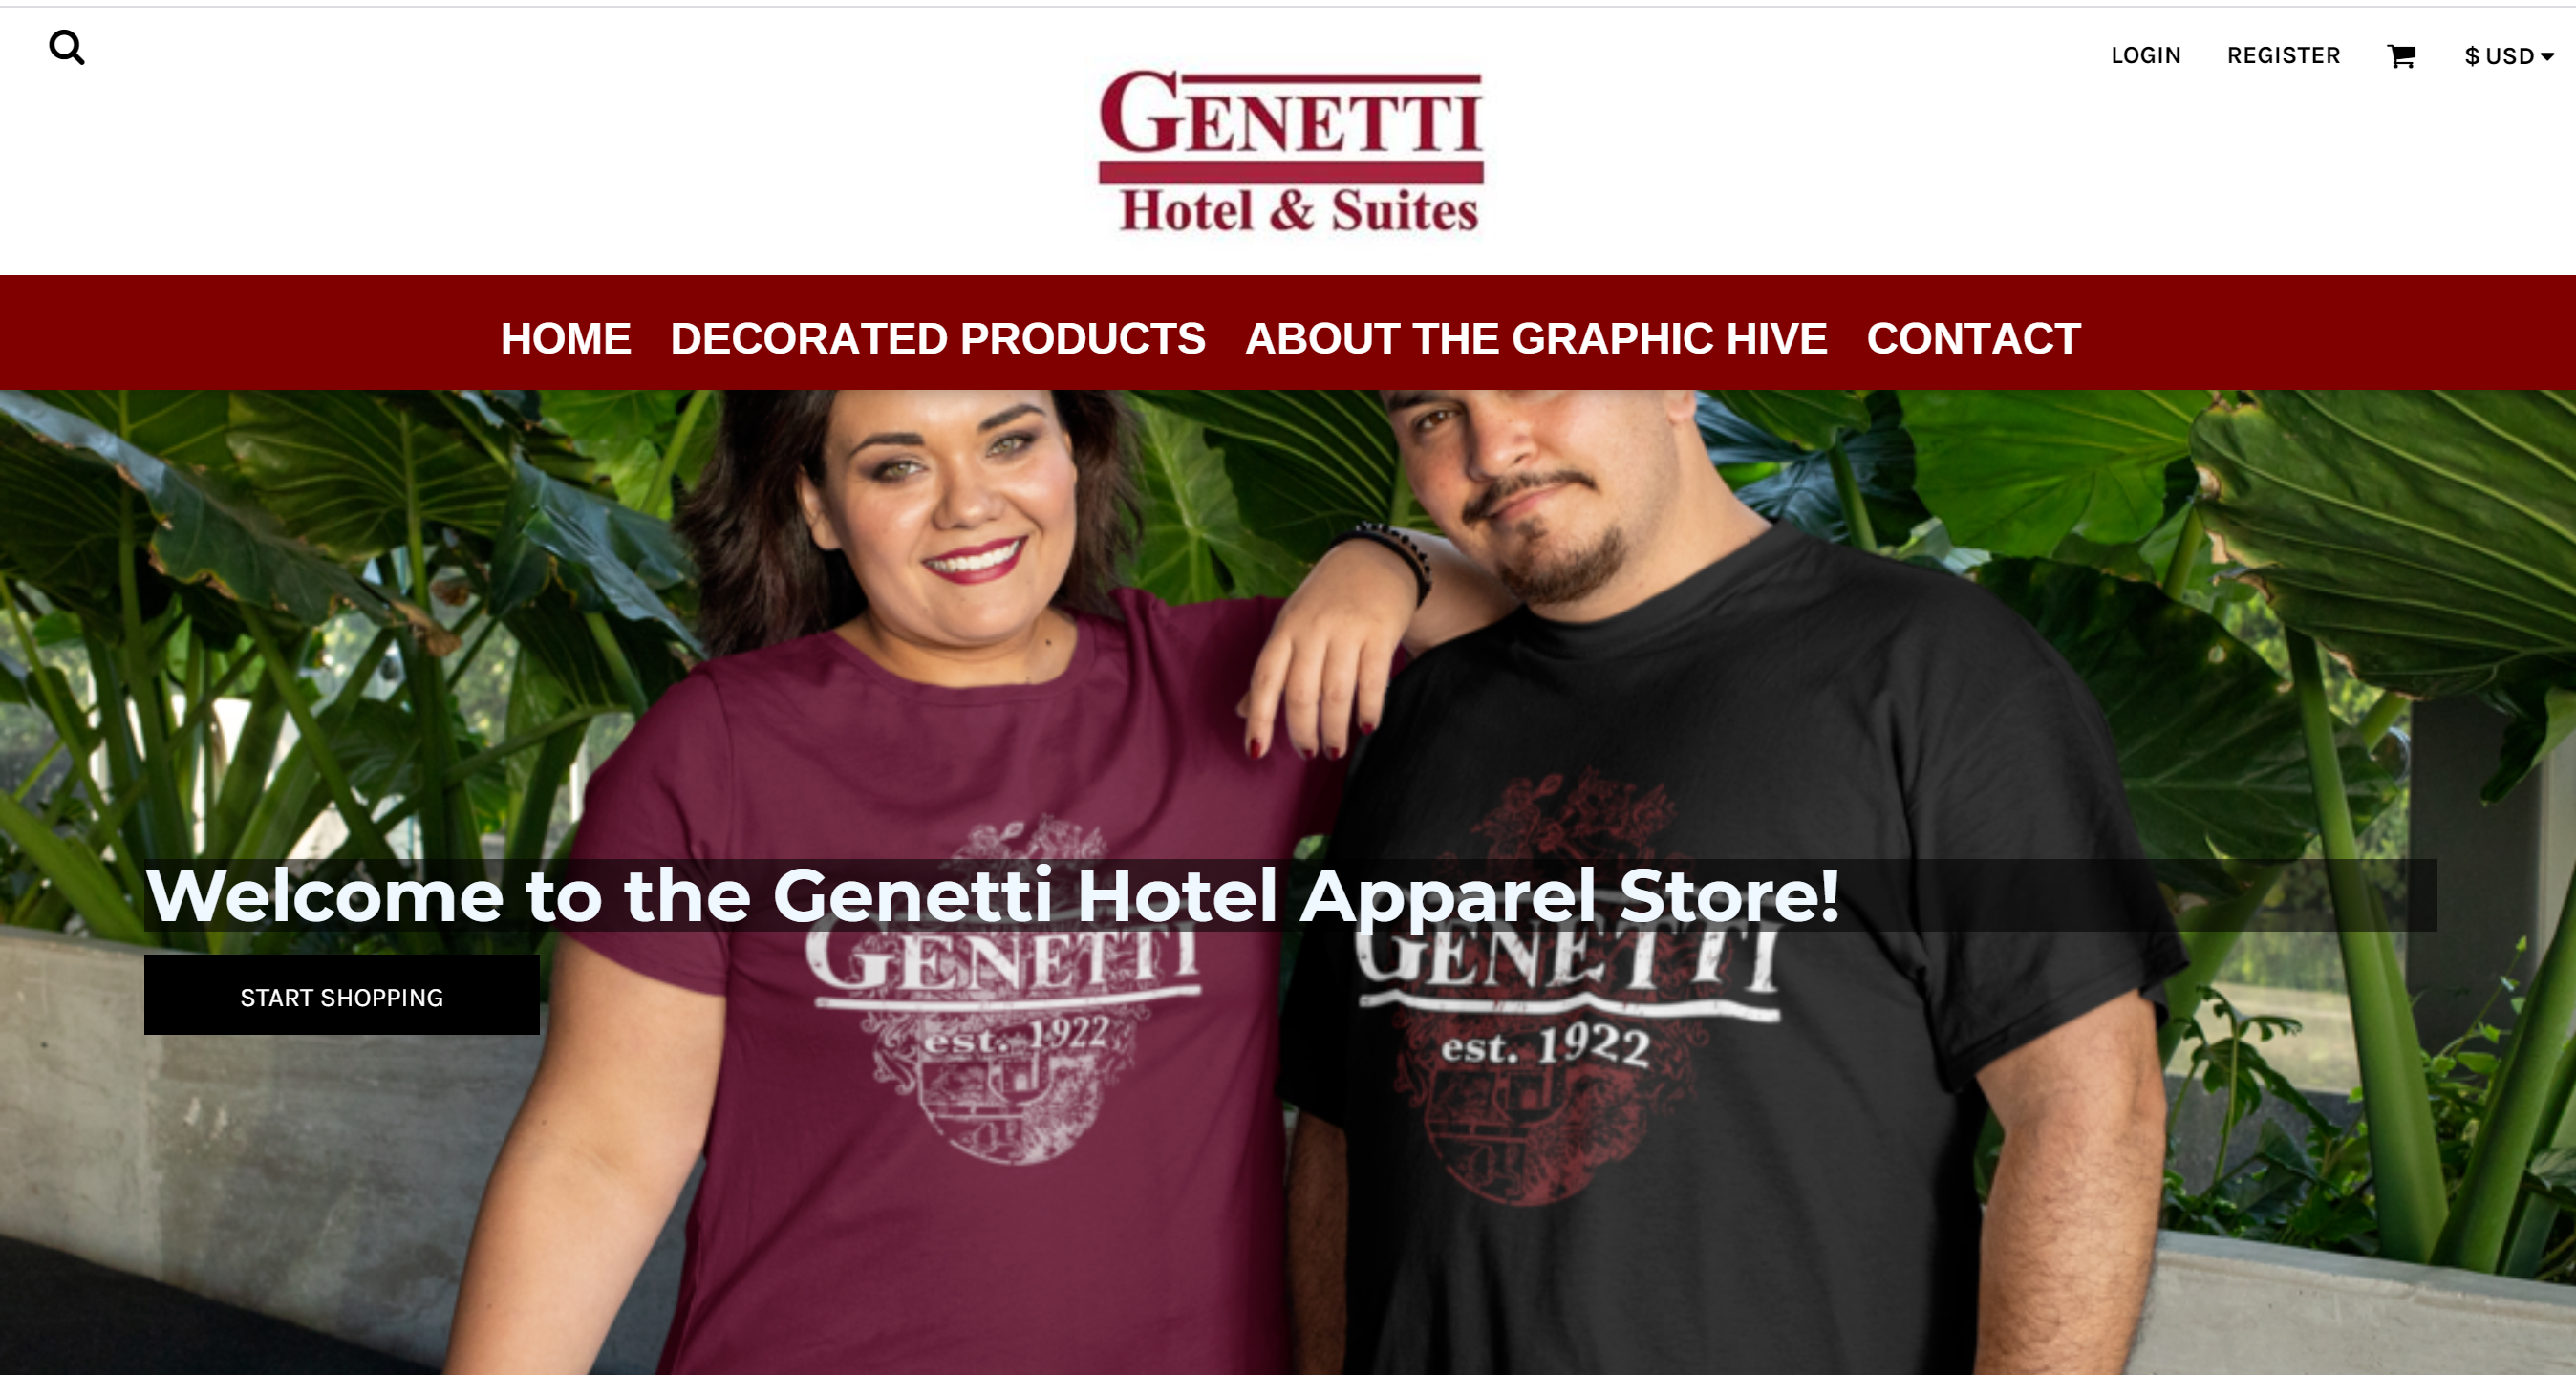 2020-04-24_13_16_08-Home_The_Genetti_Hotel_Apparel_Store